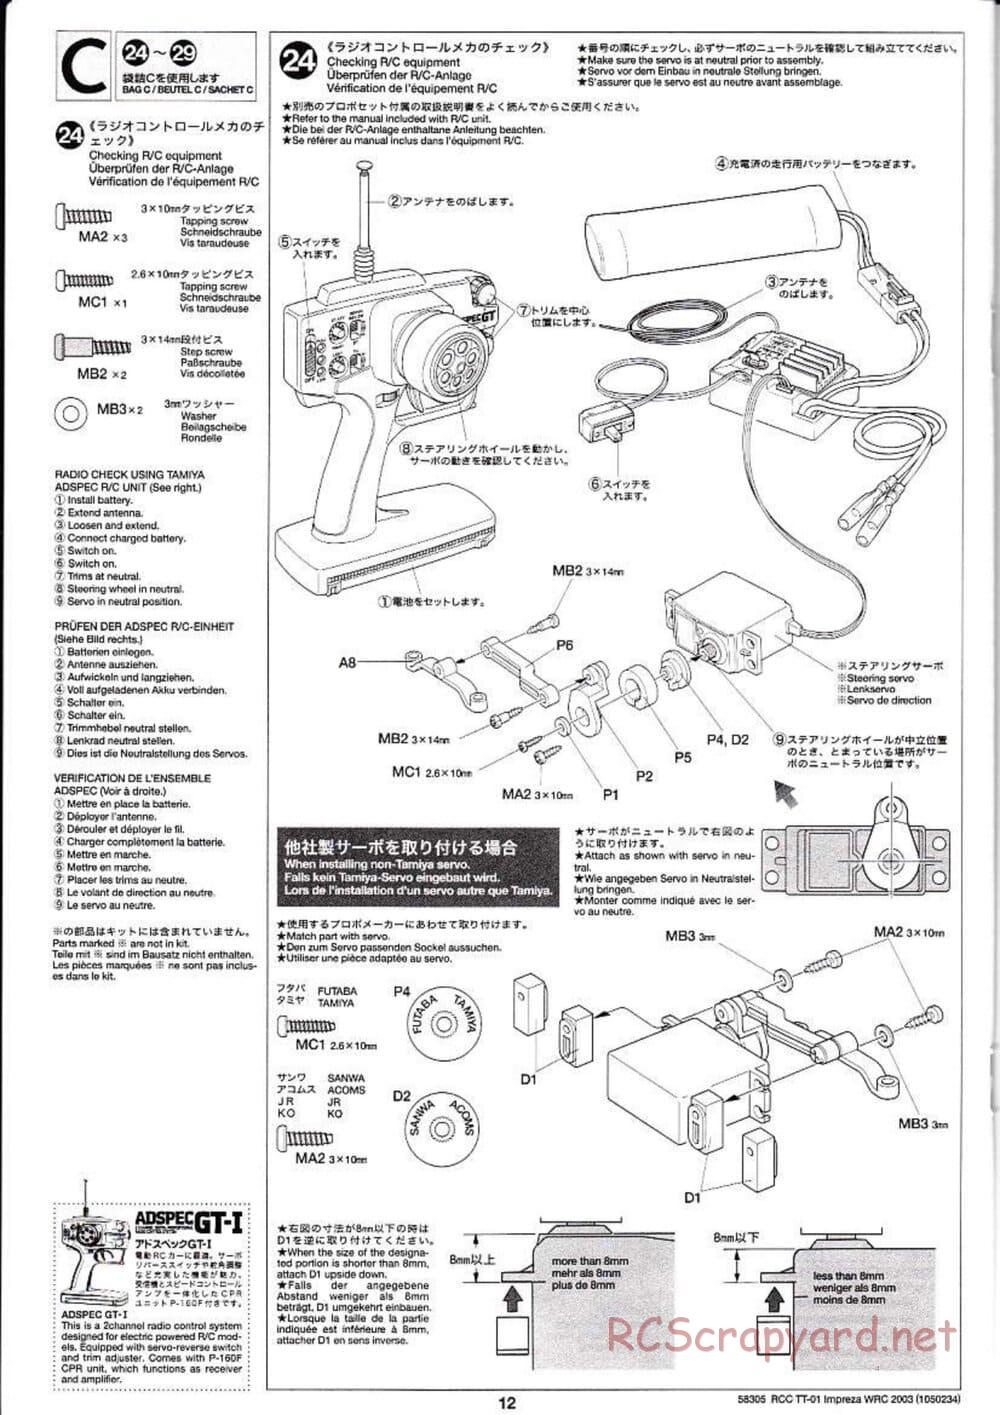 Tamiya - Subaru Impreza WRC 2003 - TT-01 Chassis - Manual - Page 12